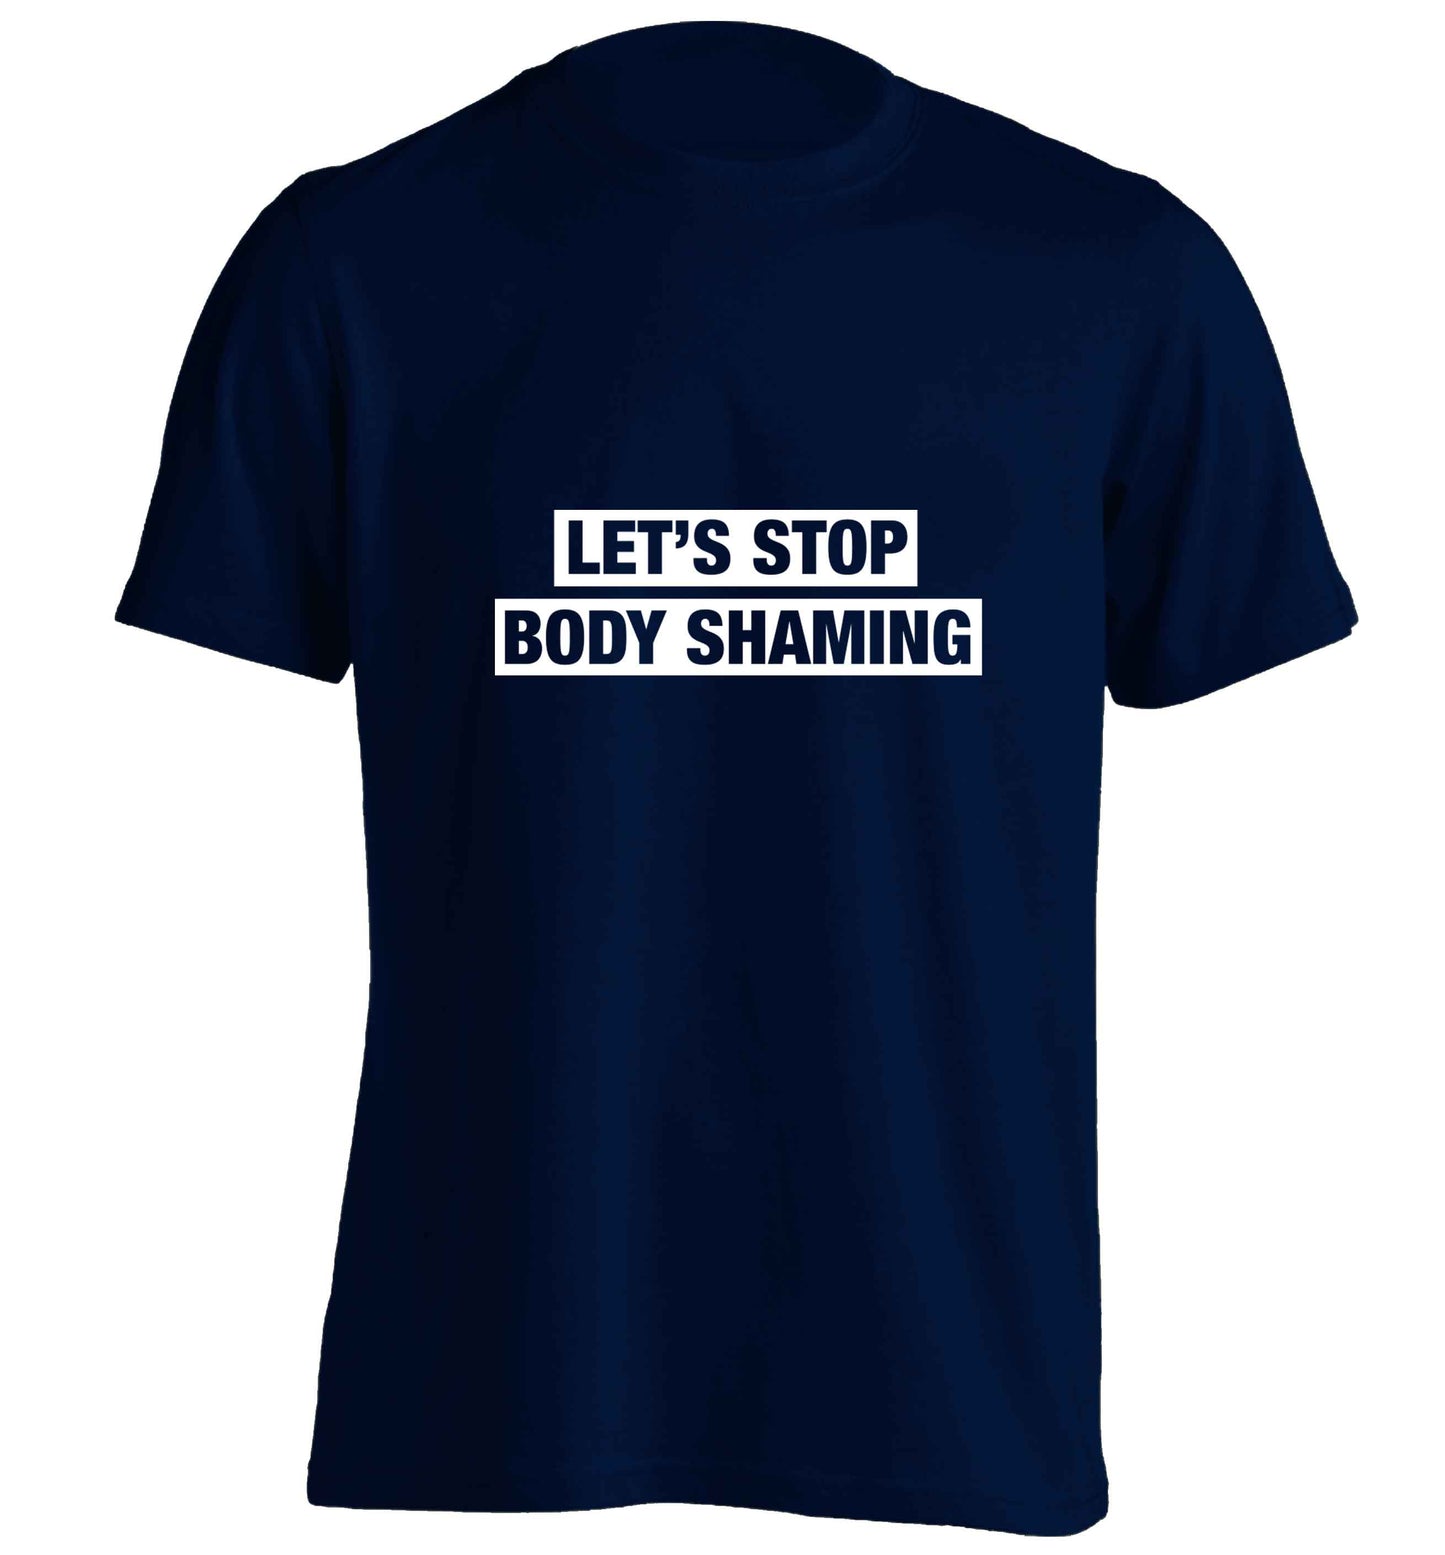 Let's stop body shaming adults unisex navy Tshirt 2XL